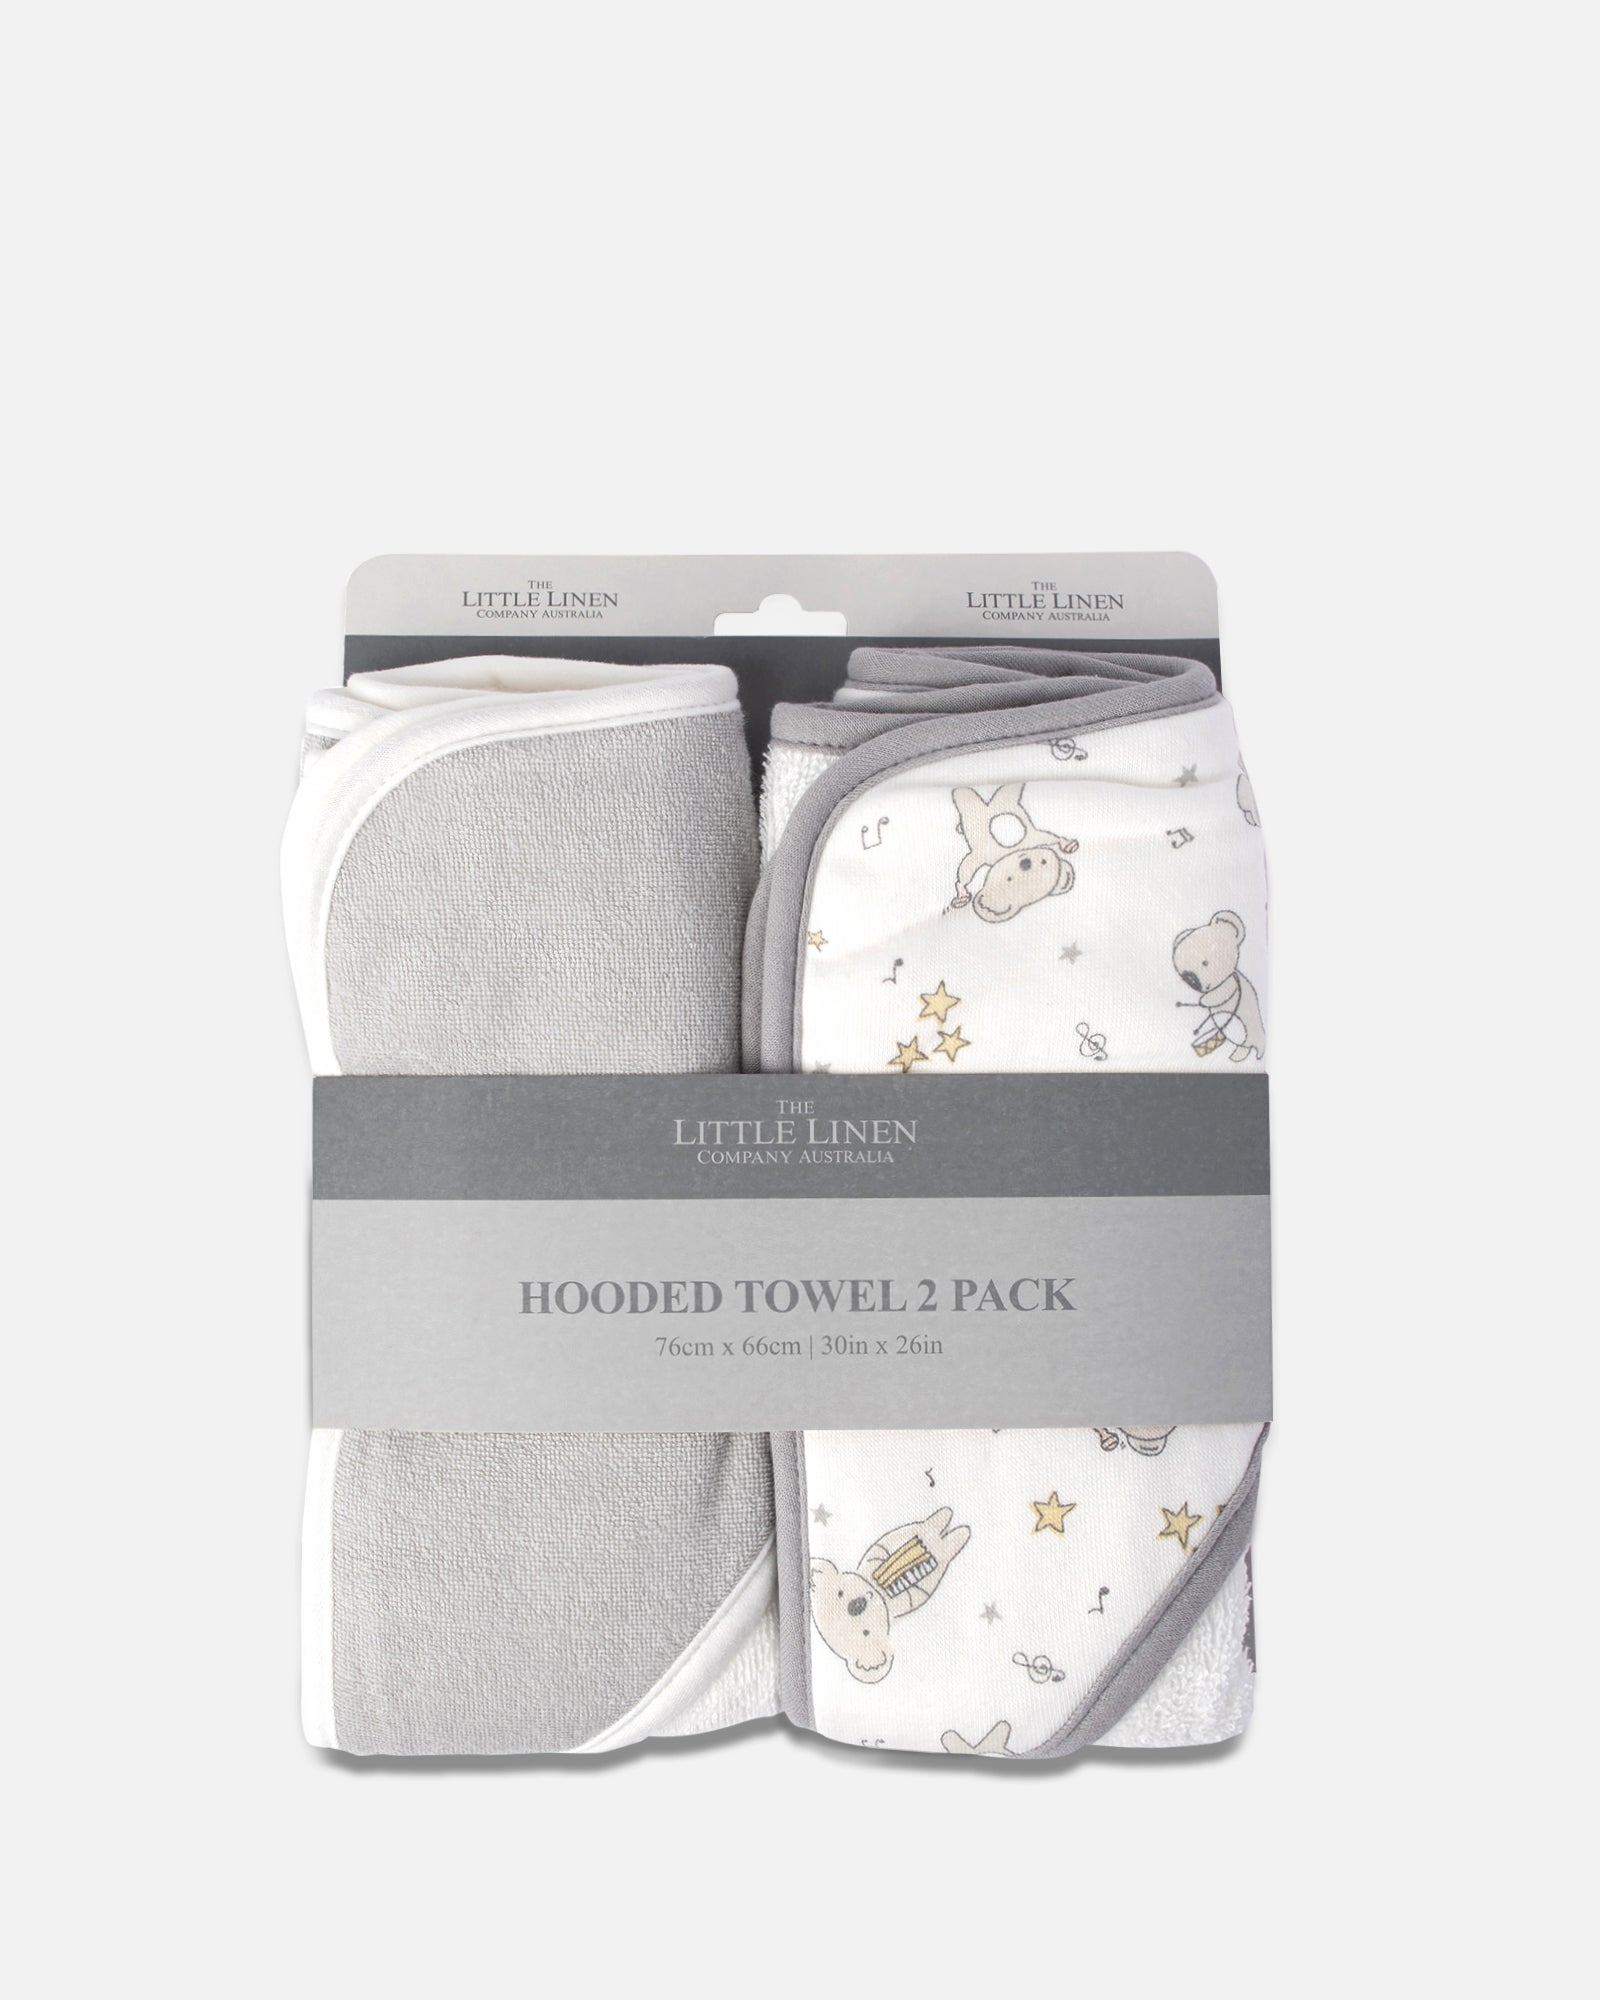 little linen Hooded Towel 2pk Cheeky Koala front pack